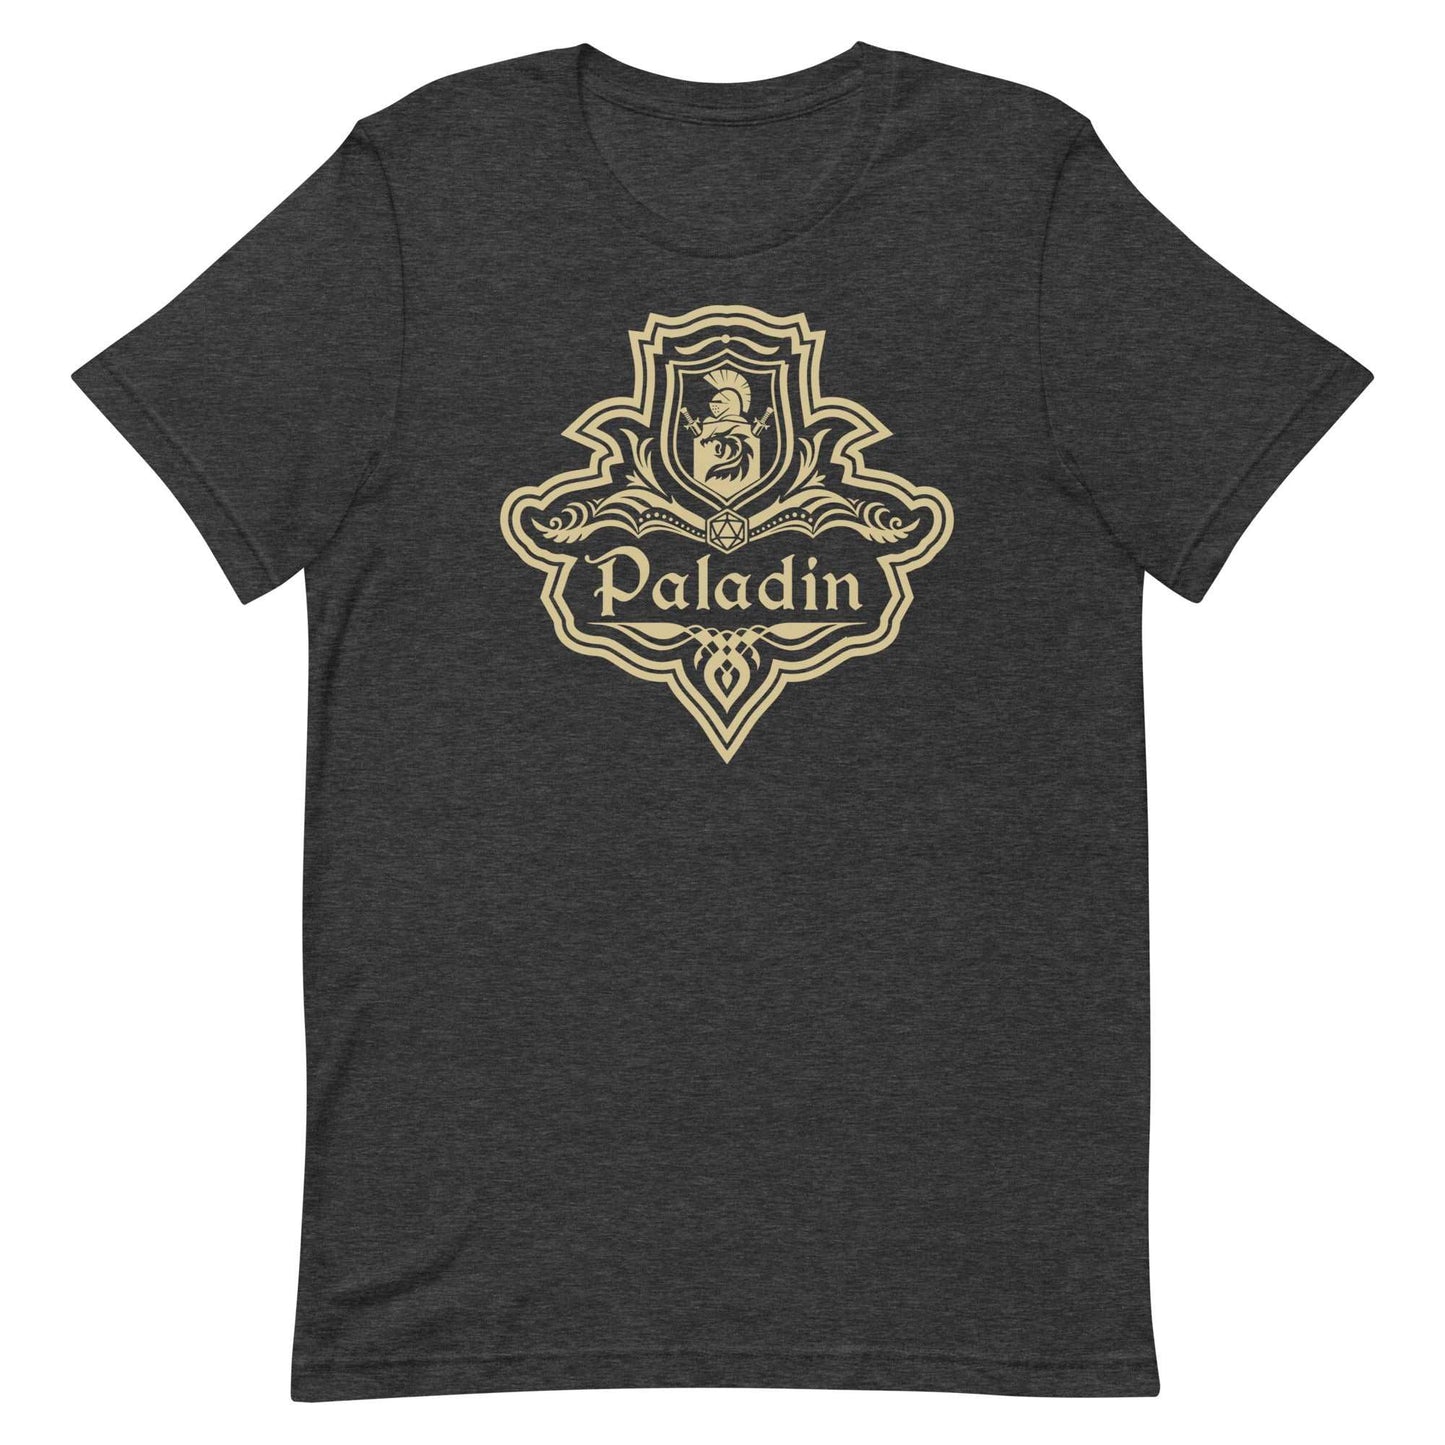 DnD Paladin Class Emblem T-Shirt - Dungeons & Dragons Paladin Tee T-Shirt Dark Grey Heather / S